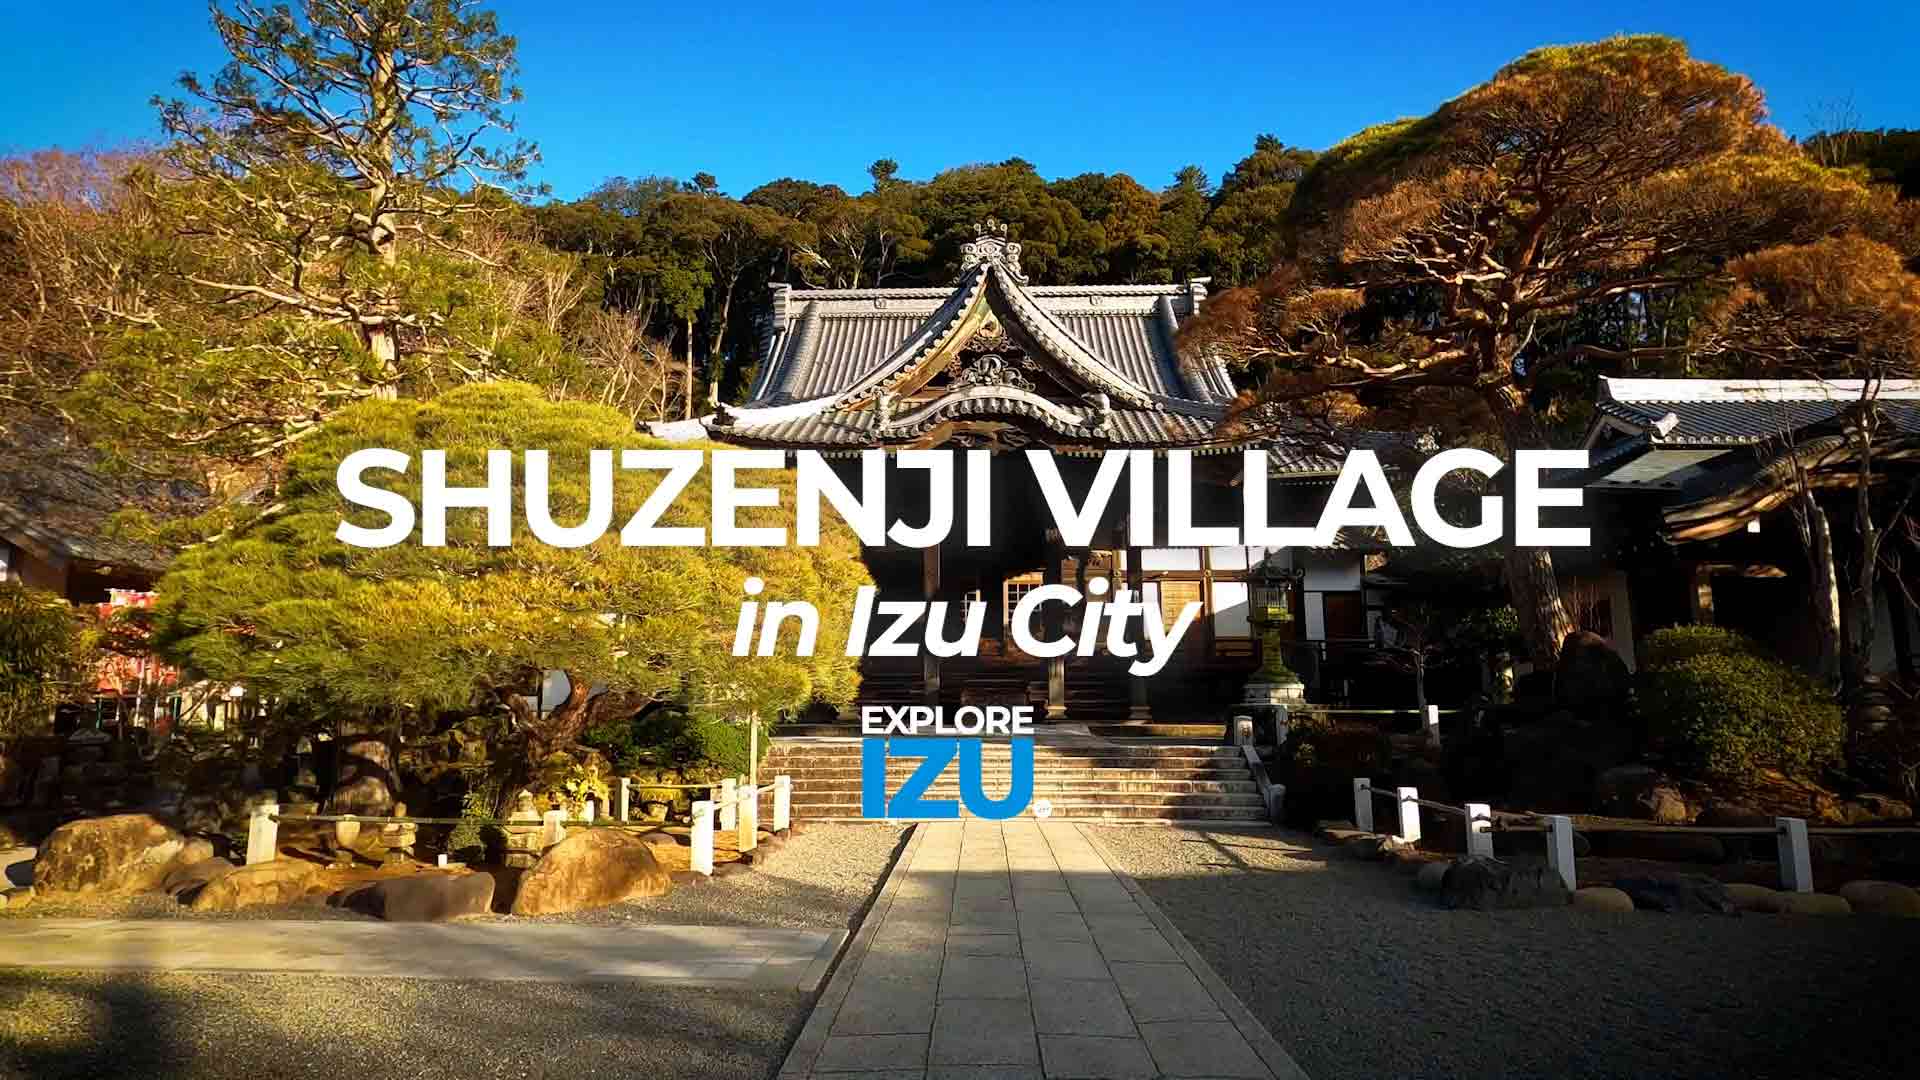 Izu City - Shuzenji